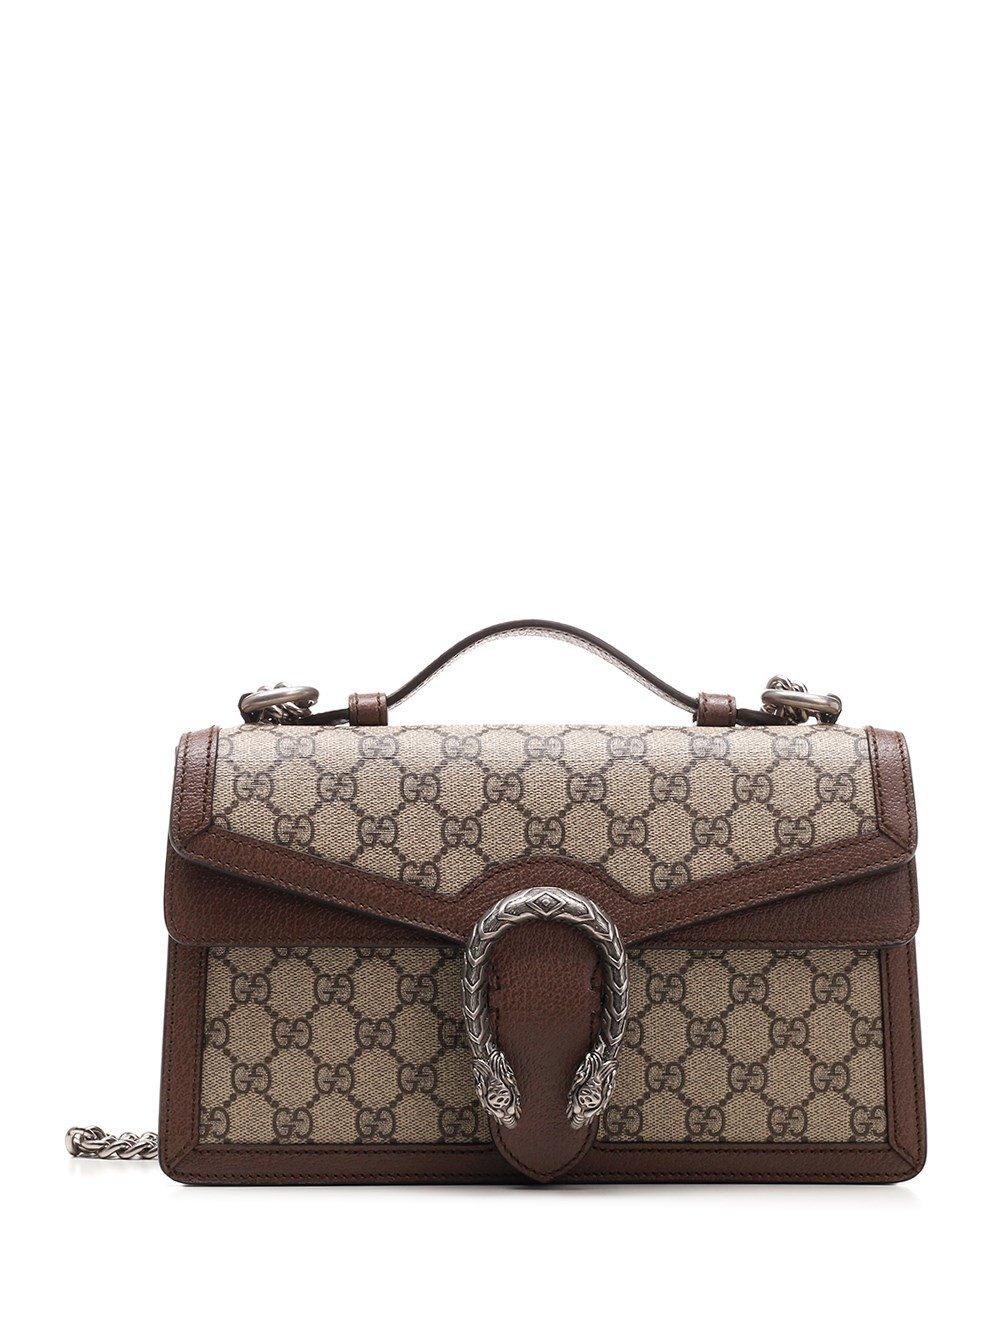 Gucci Dionysus gg Top Handle Bag |